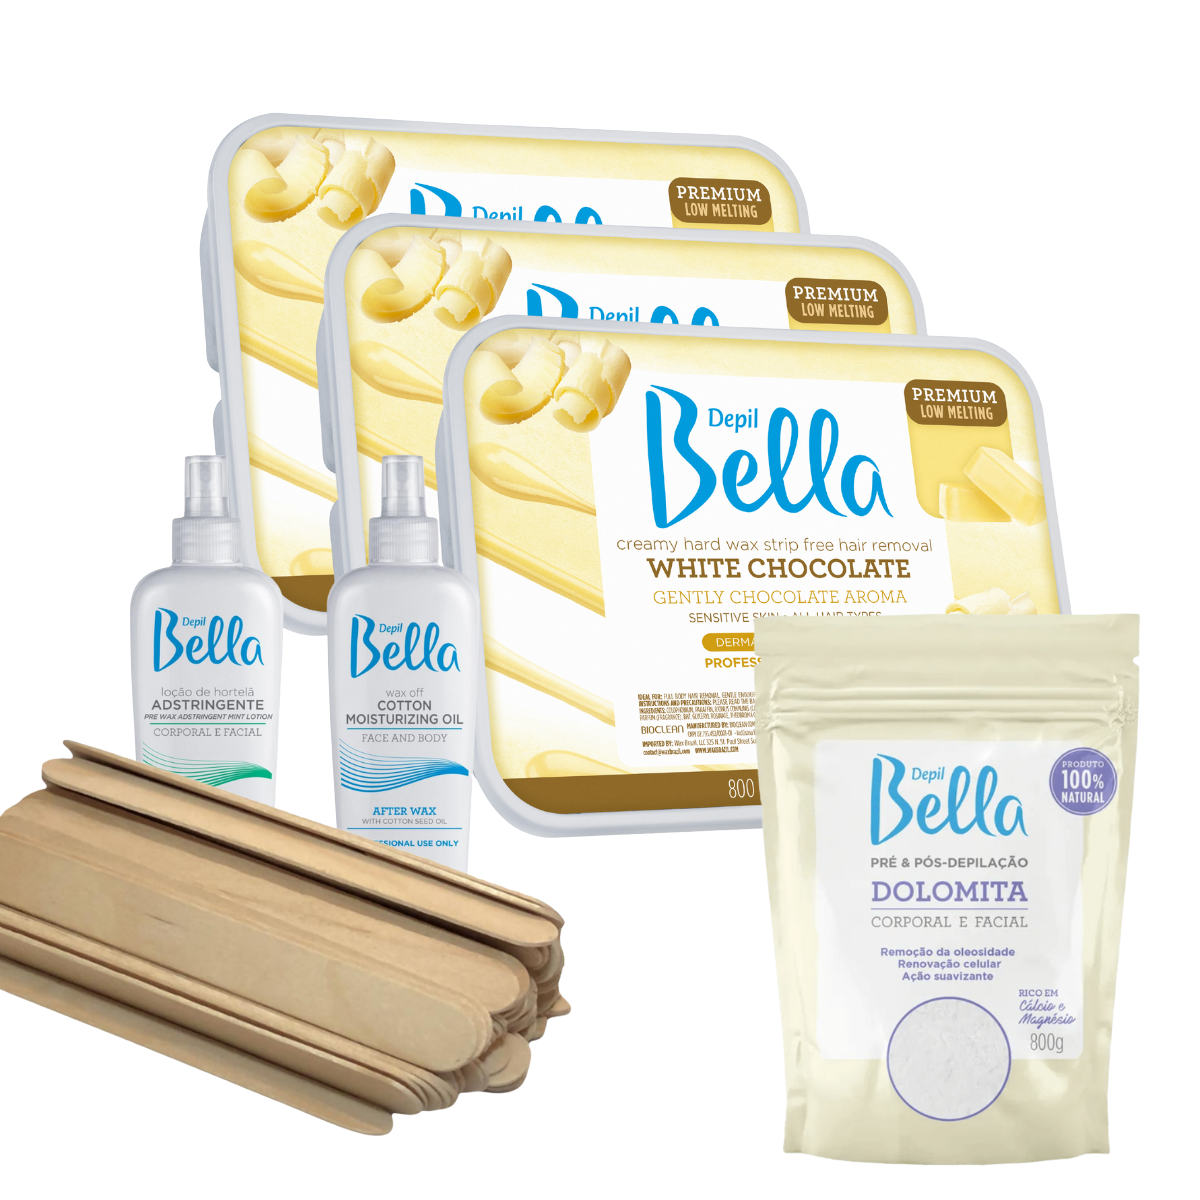 Bundle Depil Bella Hard Wax White Chocolate 28.2 Oz, Pre Waxing, Post Waxing, Dolomita, and Spatulas